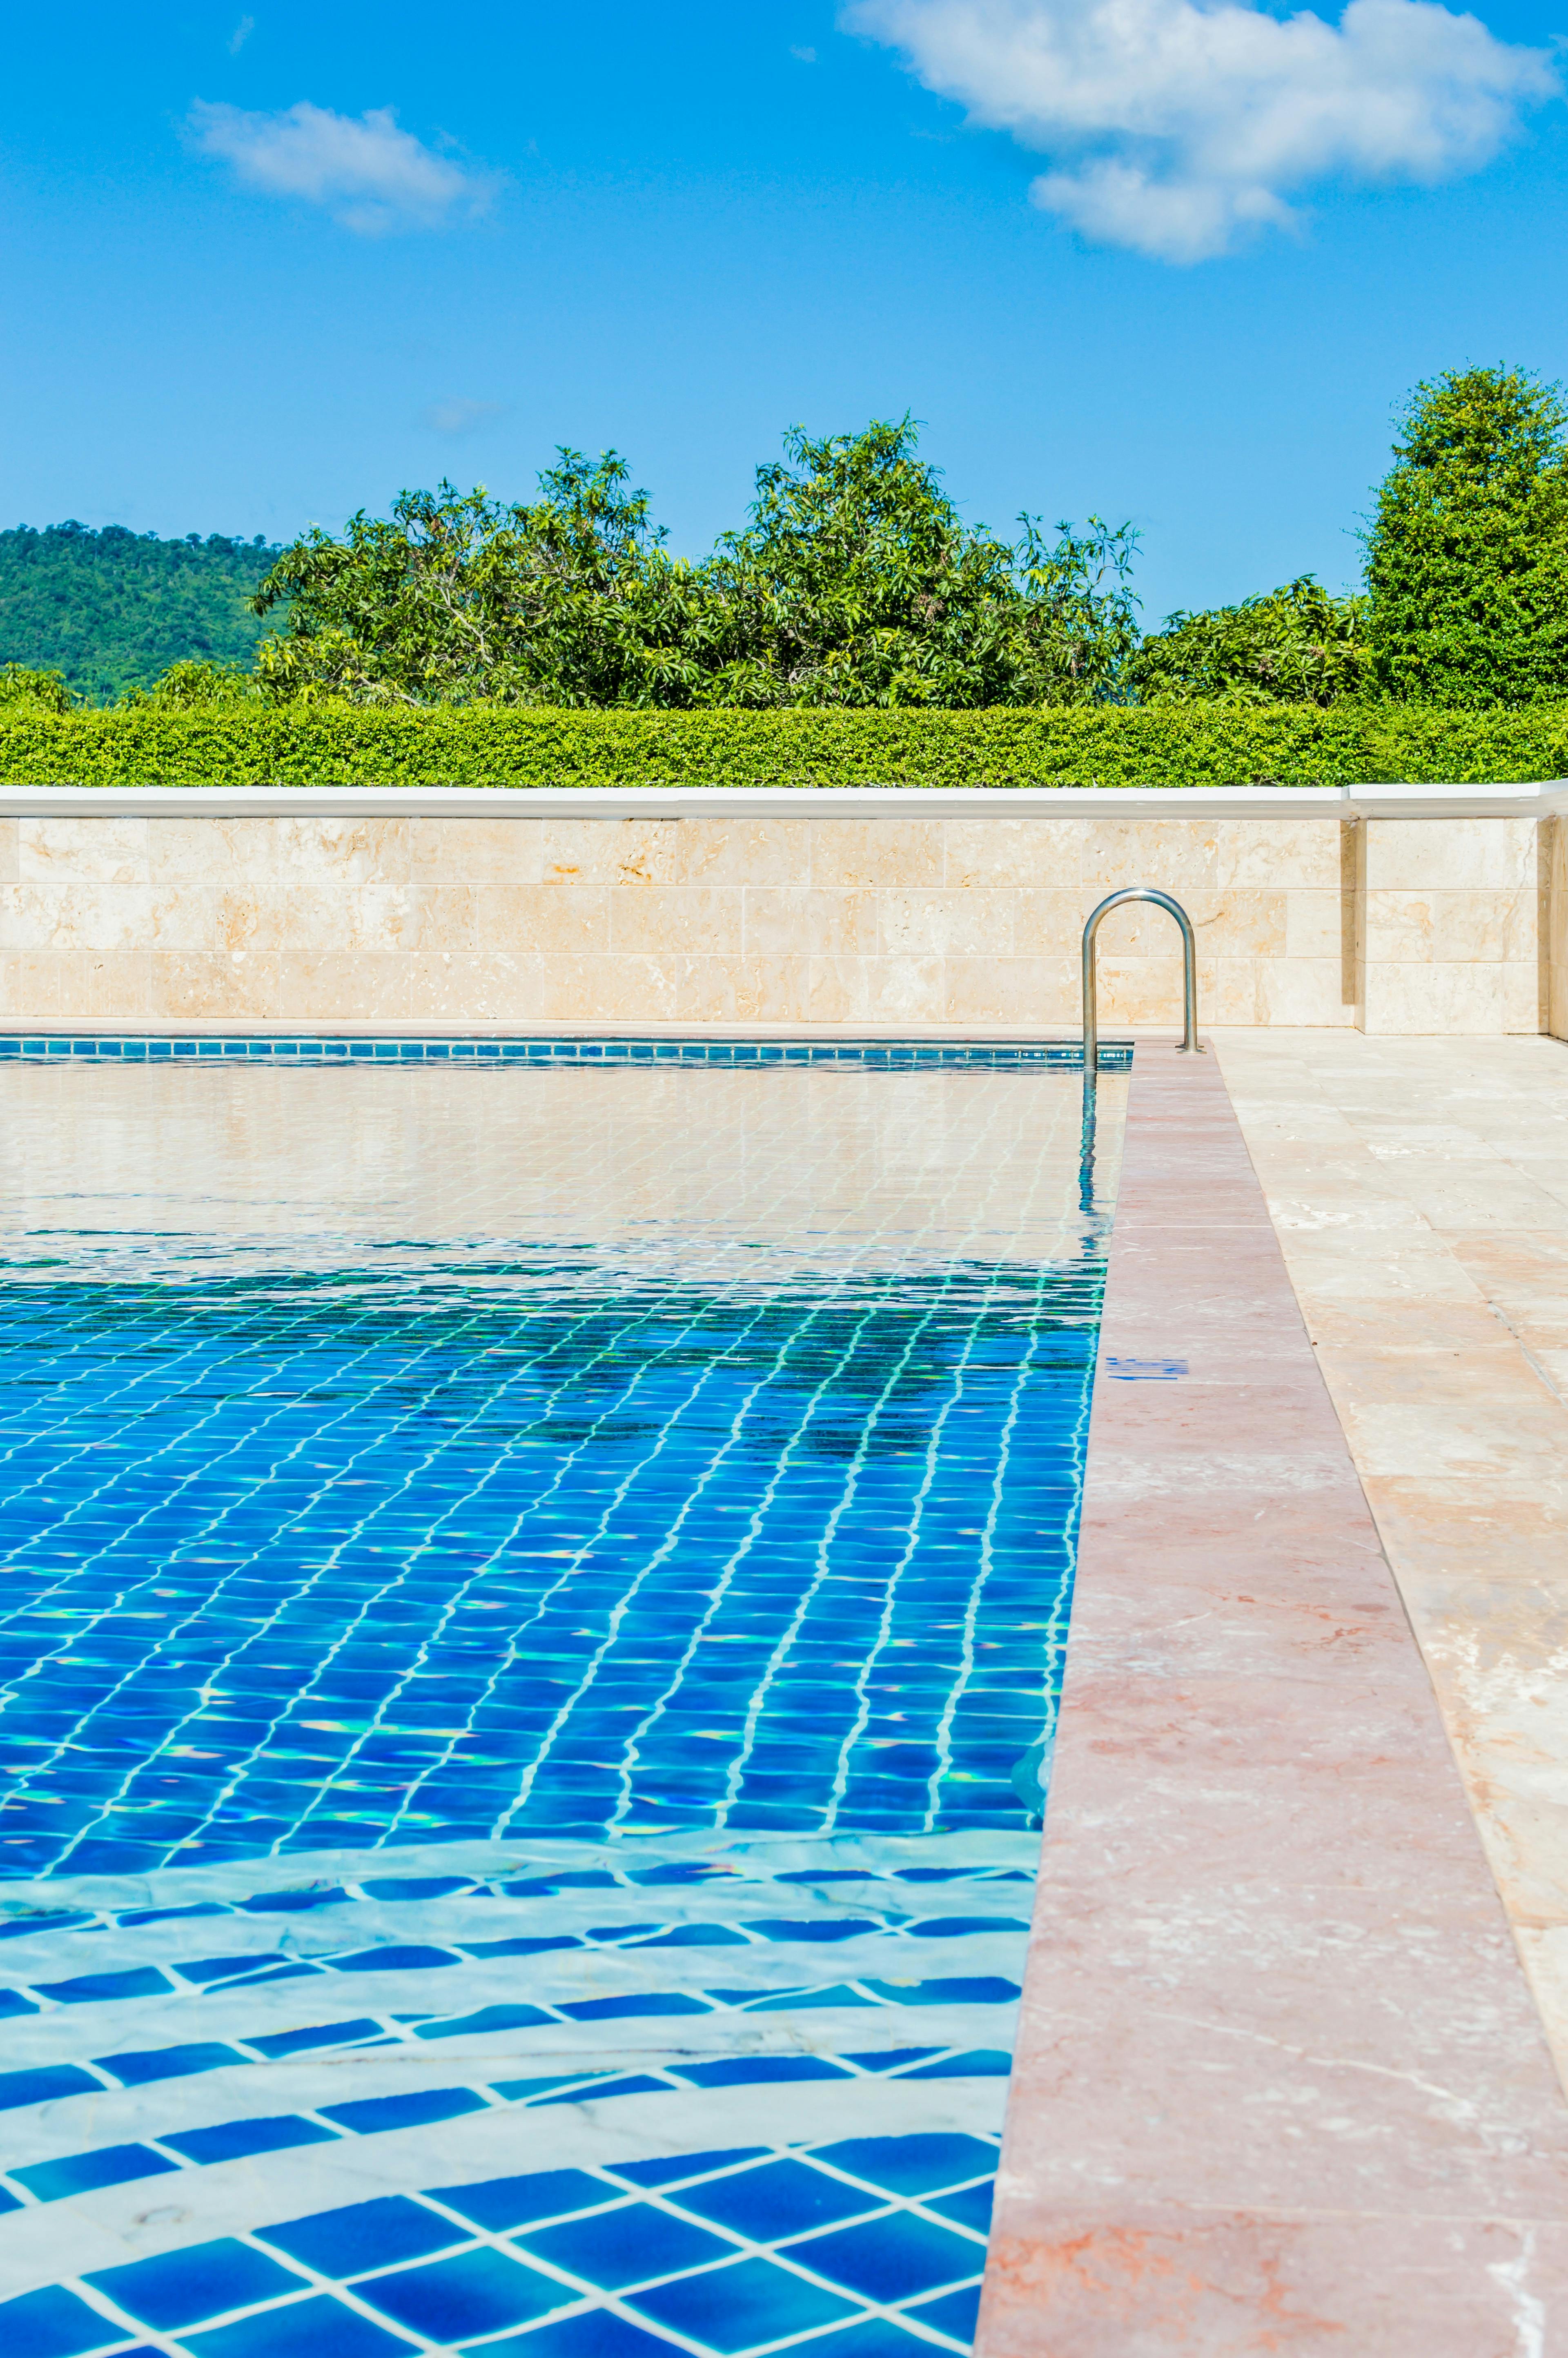 Water Pool Turquoise  Free photo on Pixabay  Pixabay